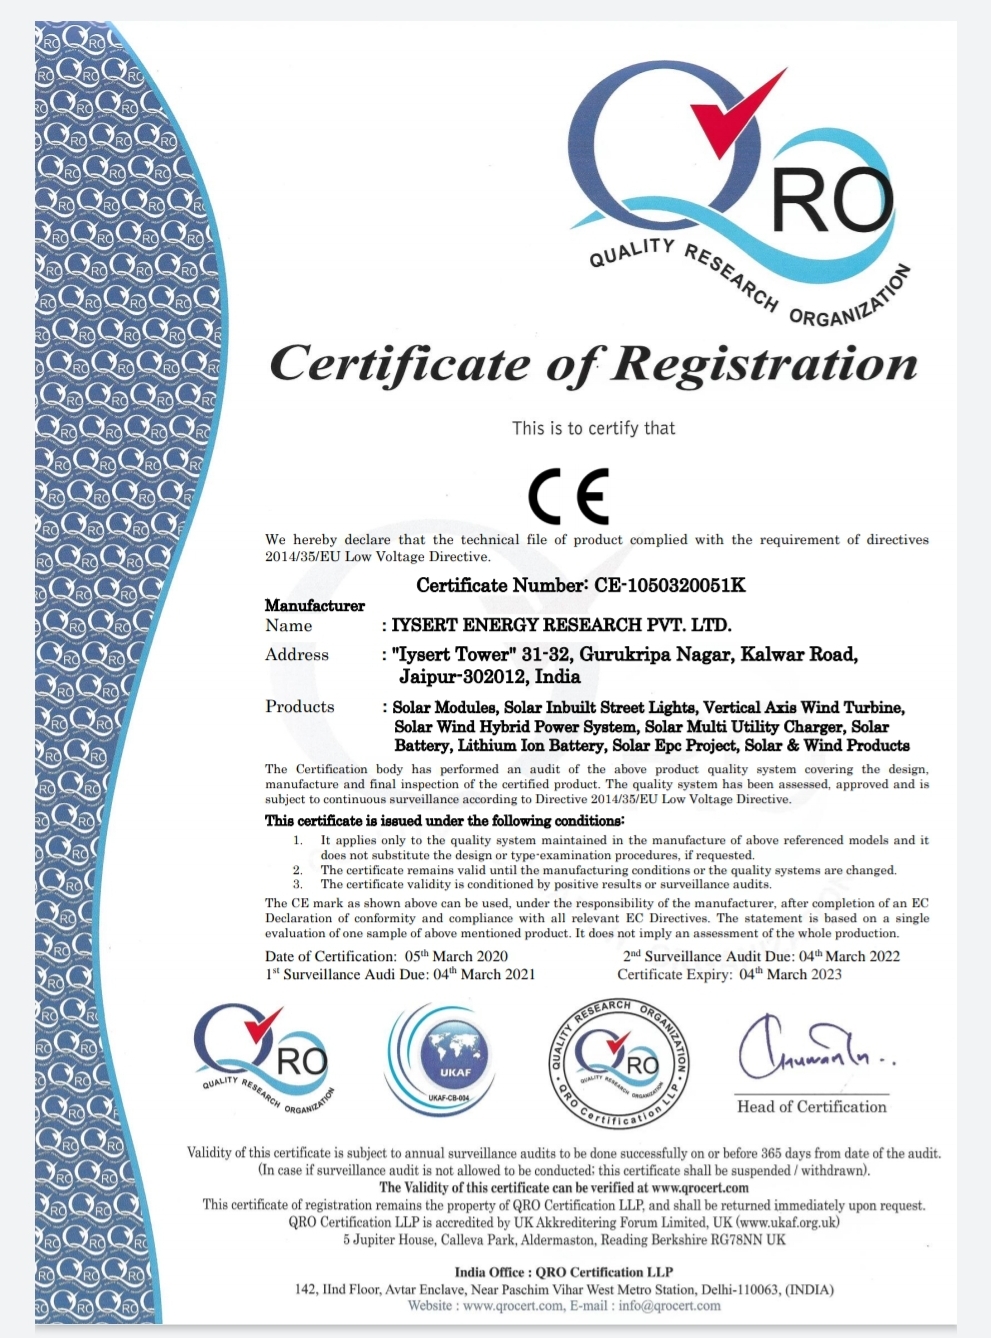 iysert energy certificates